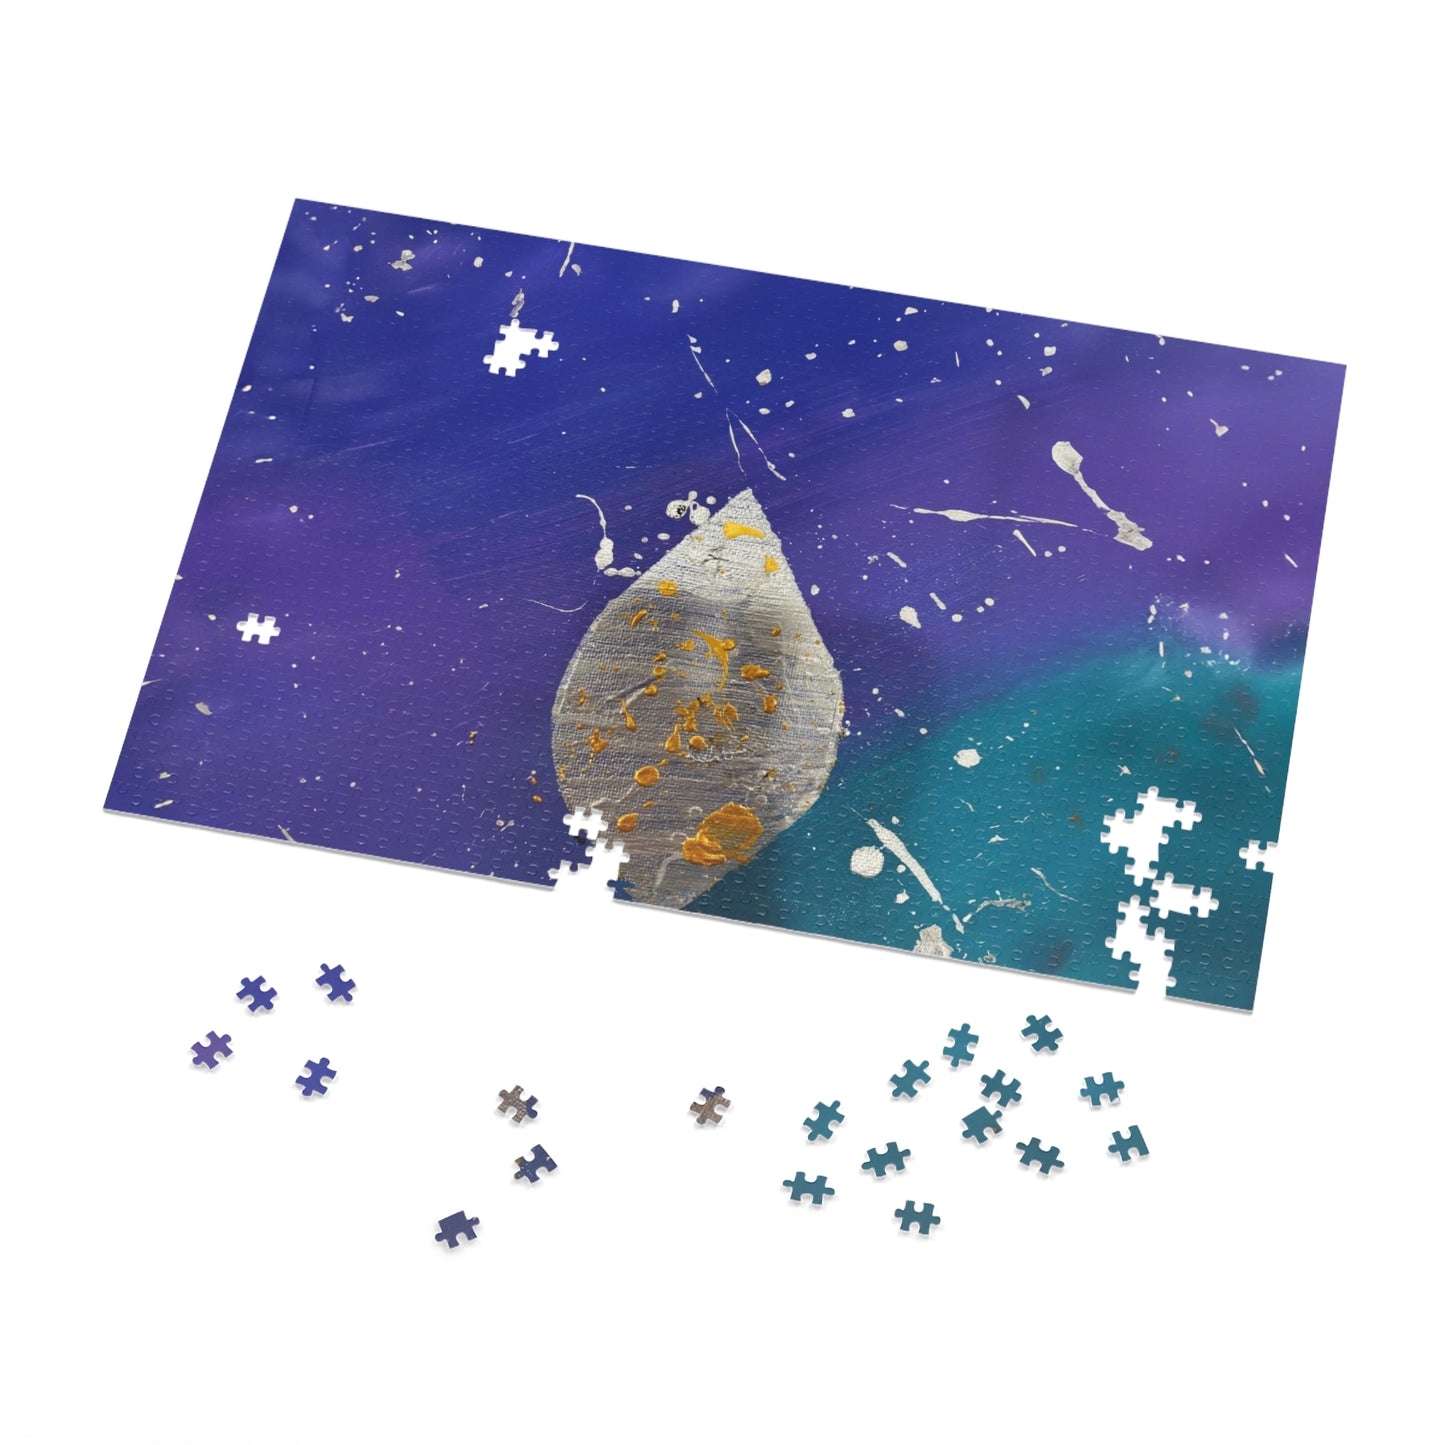 White Flame - by Chana Jigsaw Puzzle (30, 110, 500,1000-Piece)